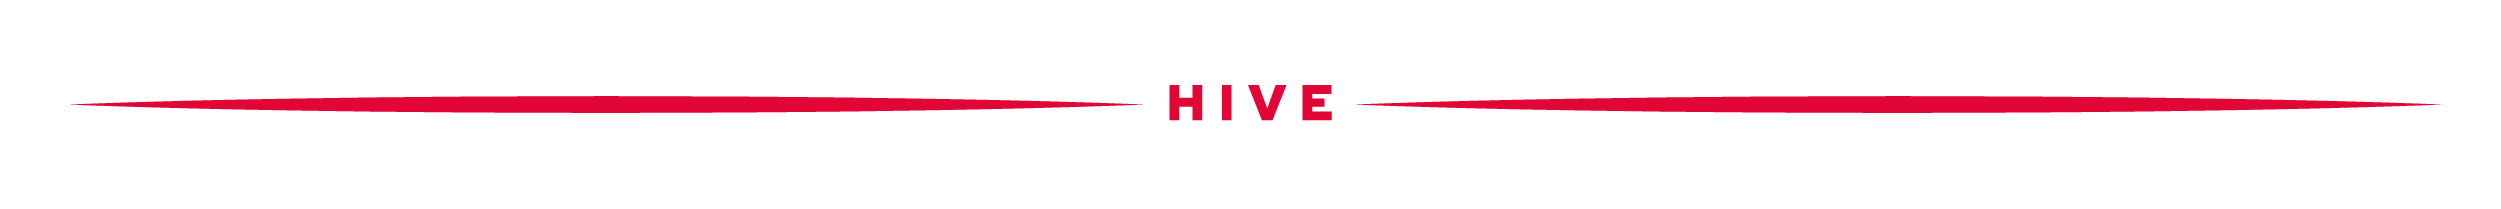 Hive line divider.png